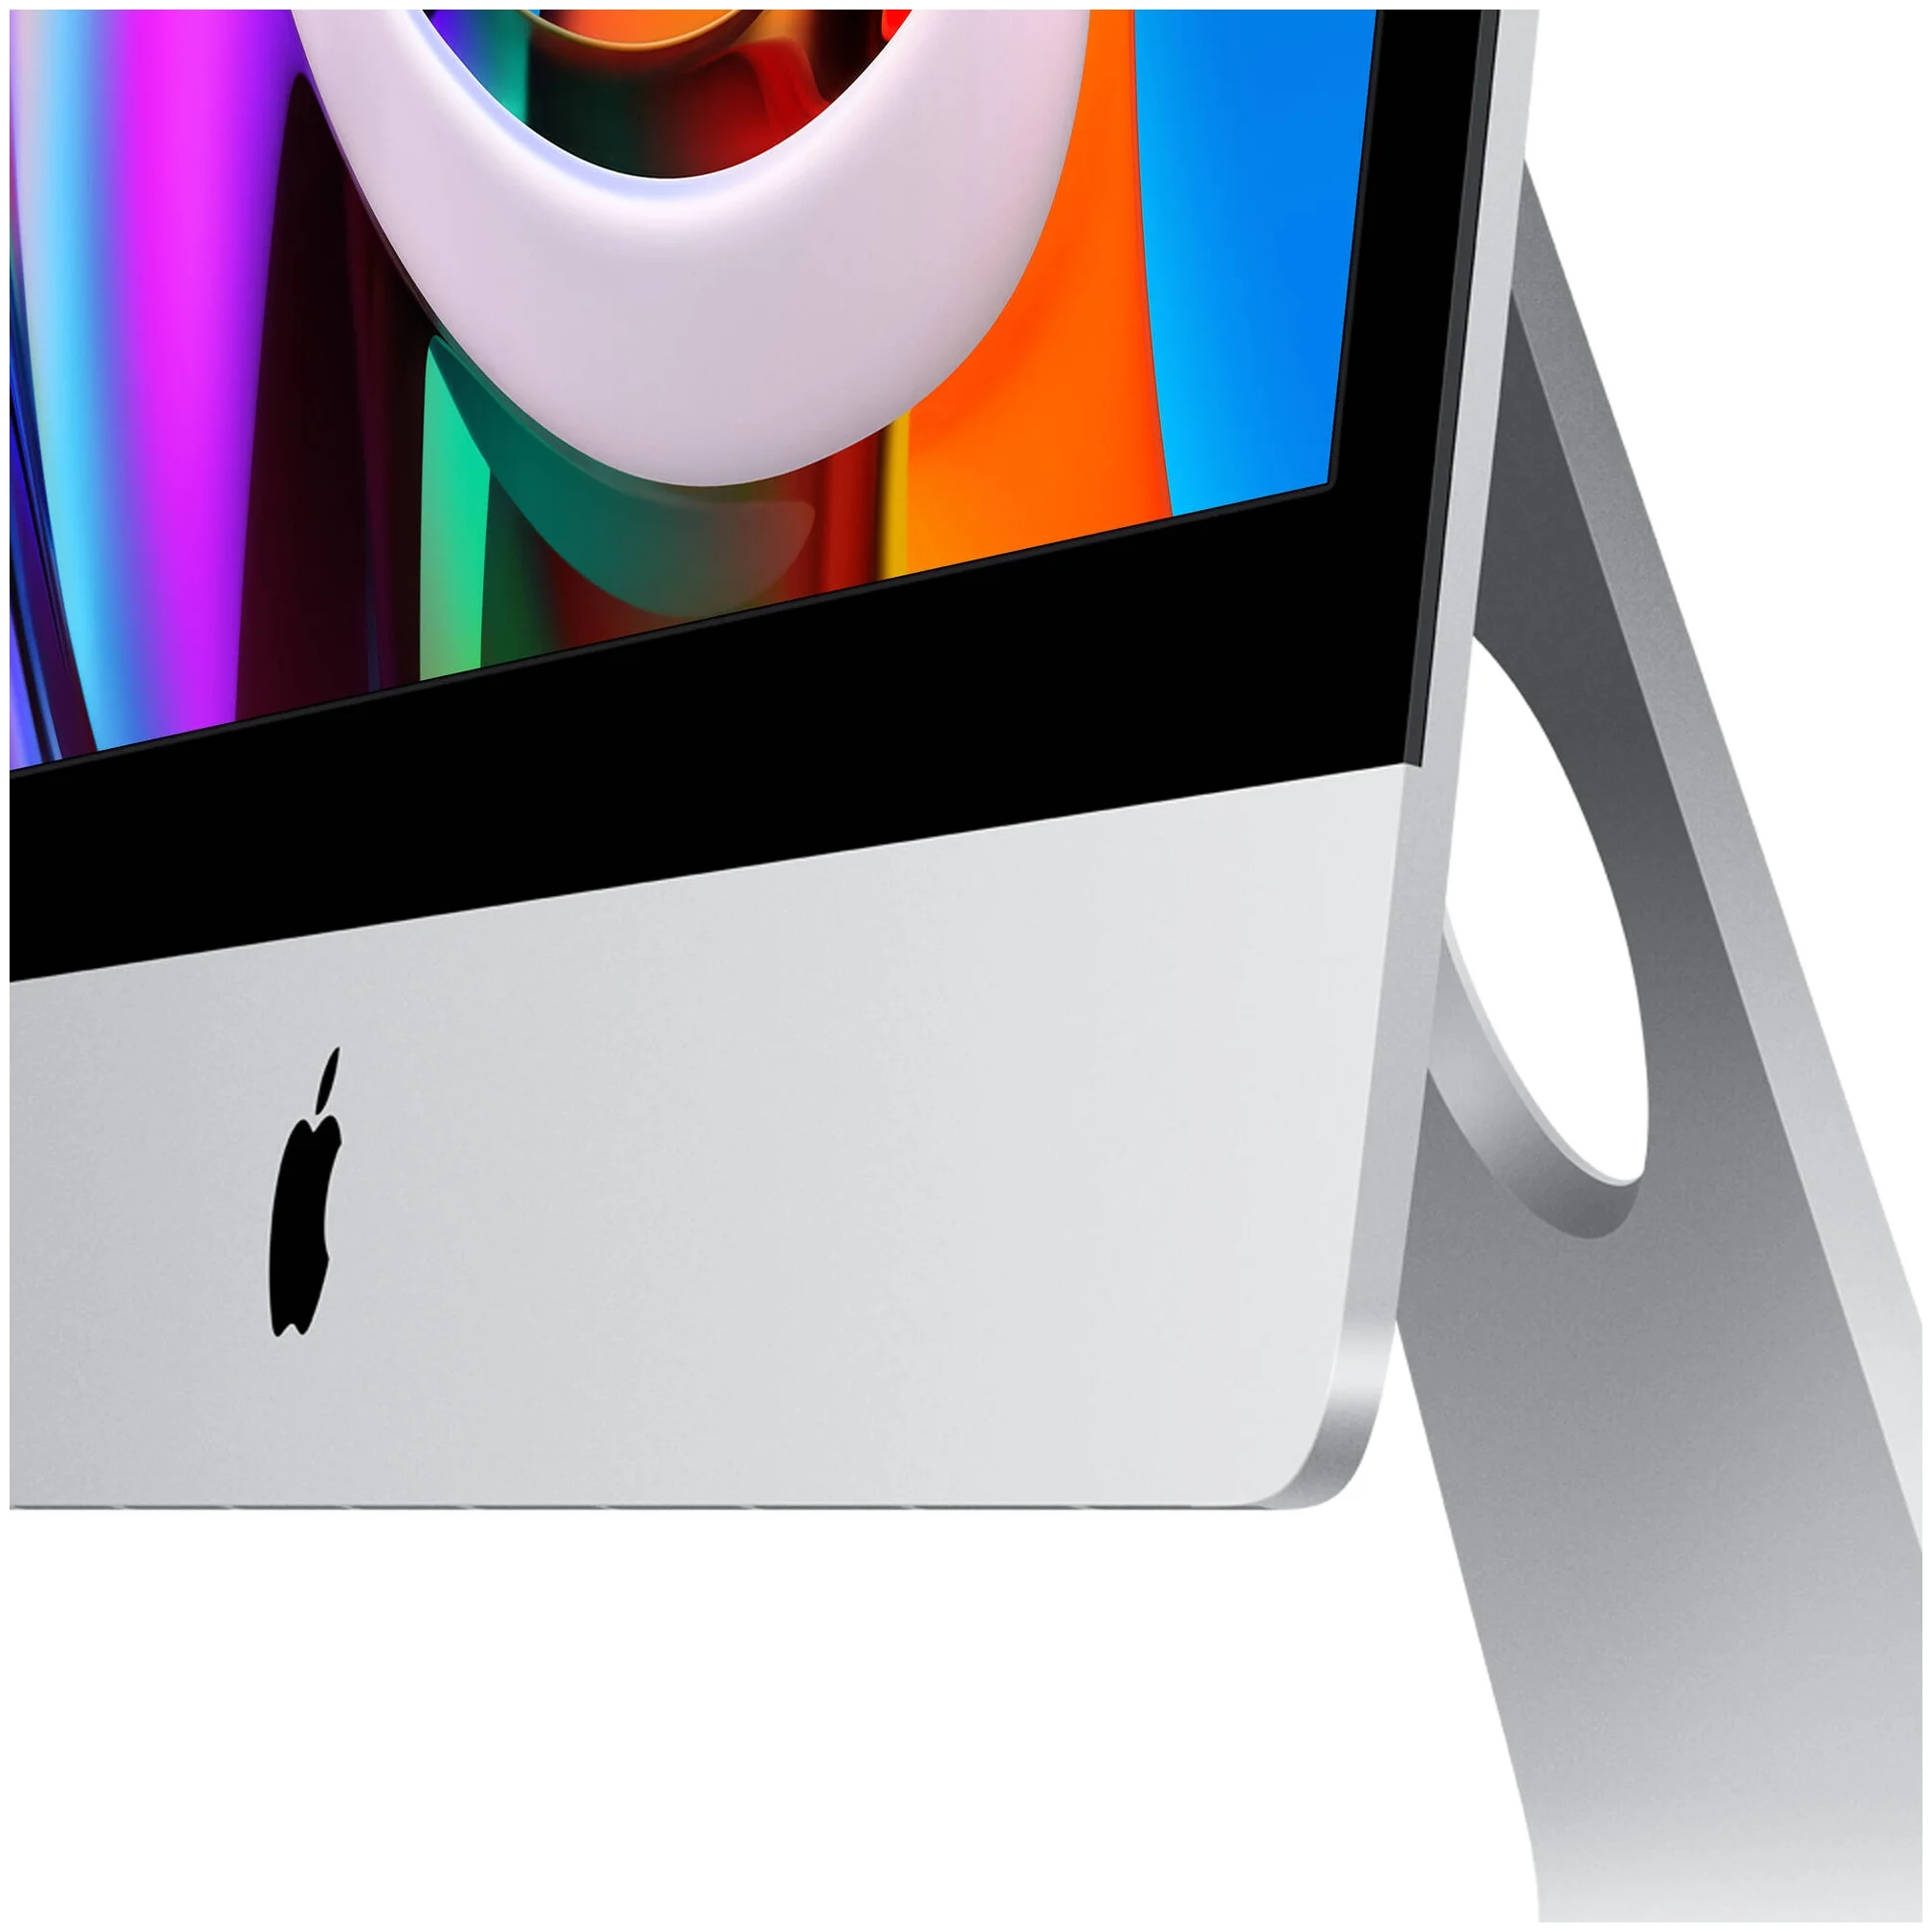 27" Apple iMac (Retina 5K, середина 2020 г.) - название видеокарты: AMD Radeon, AMD Radeon Pro 5500 XT, AMD Radeon Pro 5300